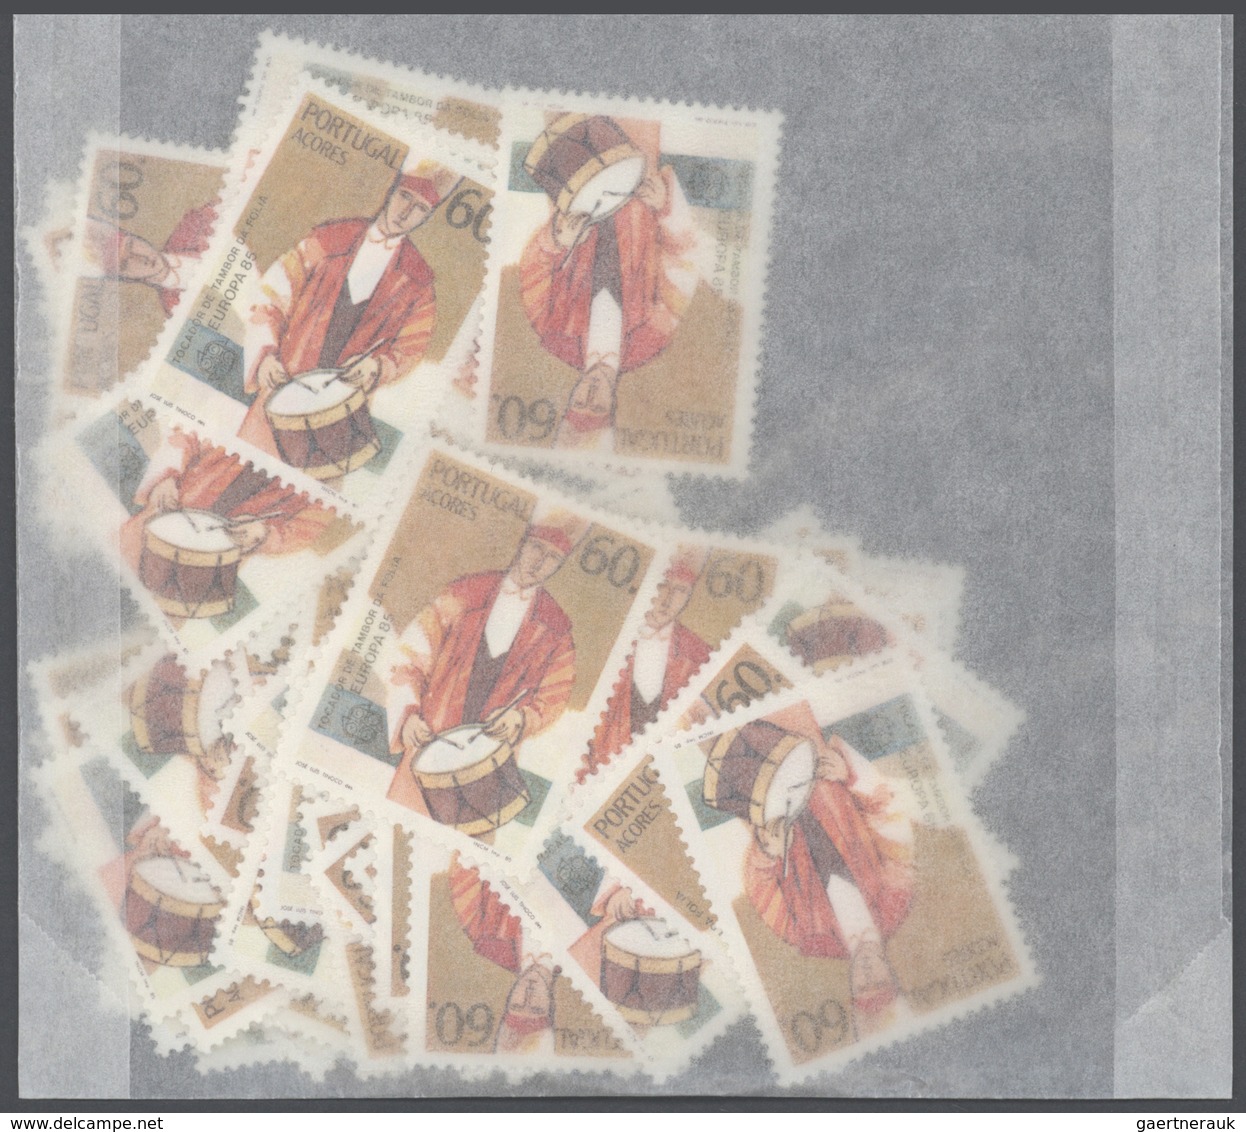 Portugal - Azoren: 1981-1990: Bulk Lot, CEPT Stamps In Complete Sets. 1981: 800 Sets, 1982: 4400 Set - Azores